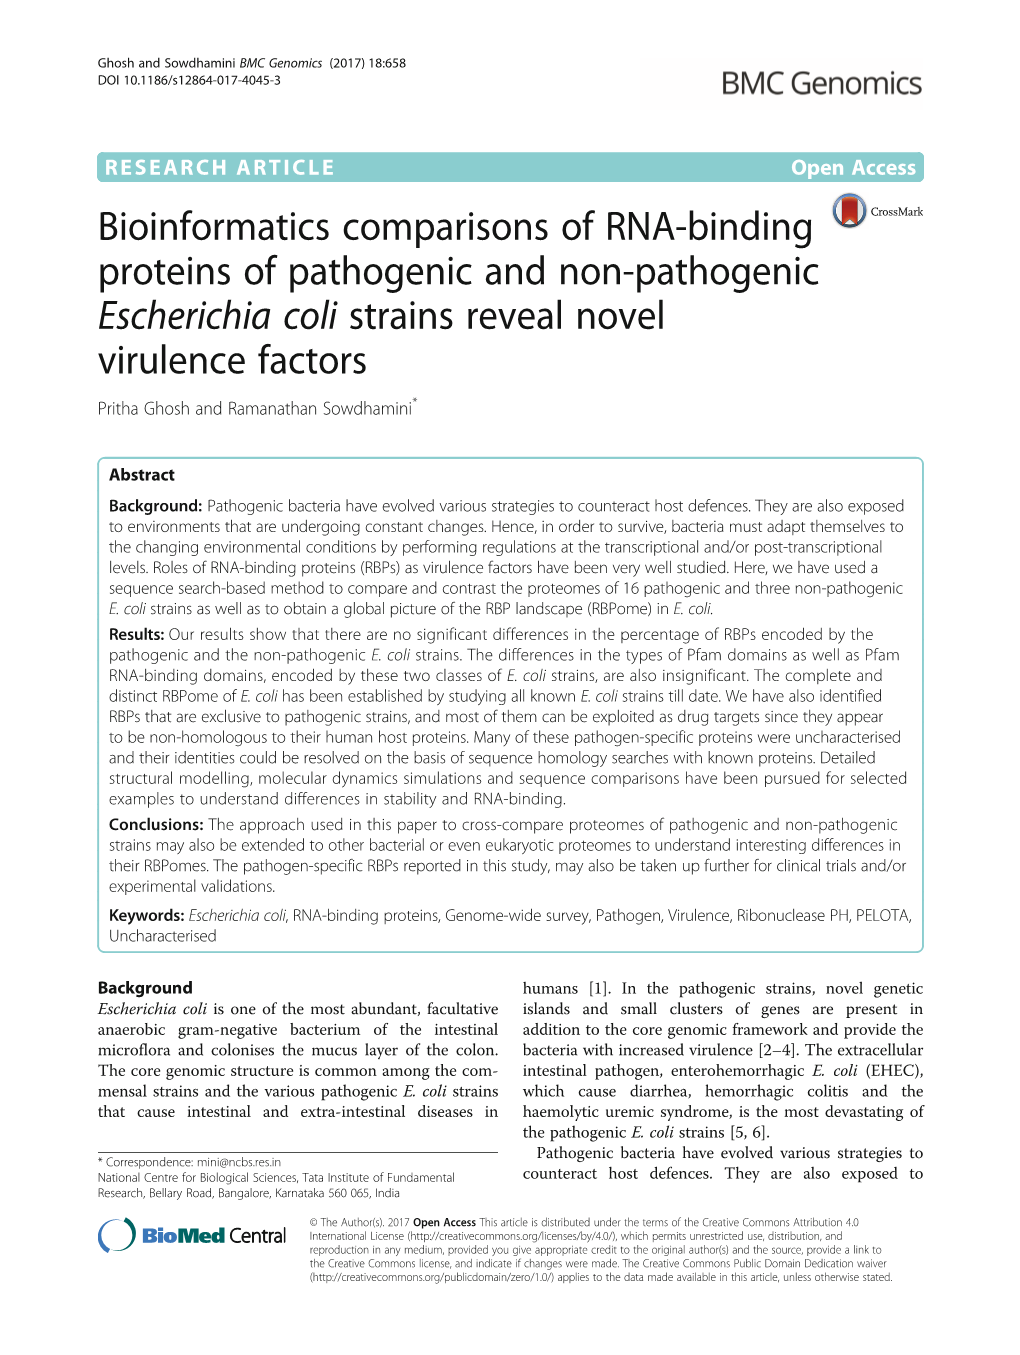 Bioinformatics Comparisons of RNA-Binding Proteins of Pathogenic and Non-Pathogenic Escherichia Coli Strains Reveal Novel Virule